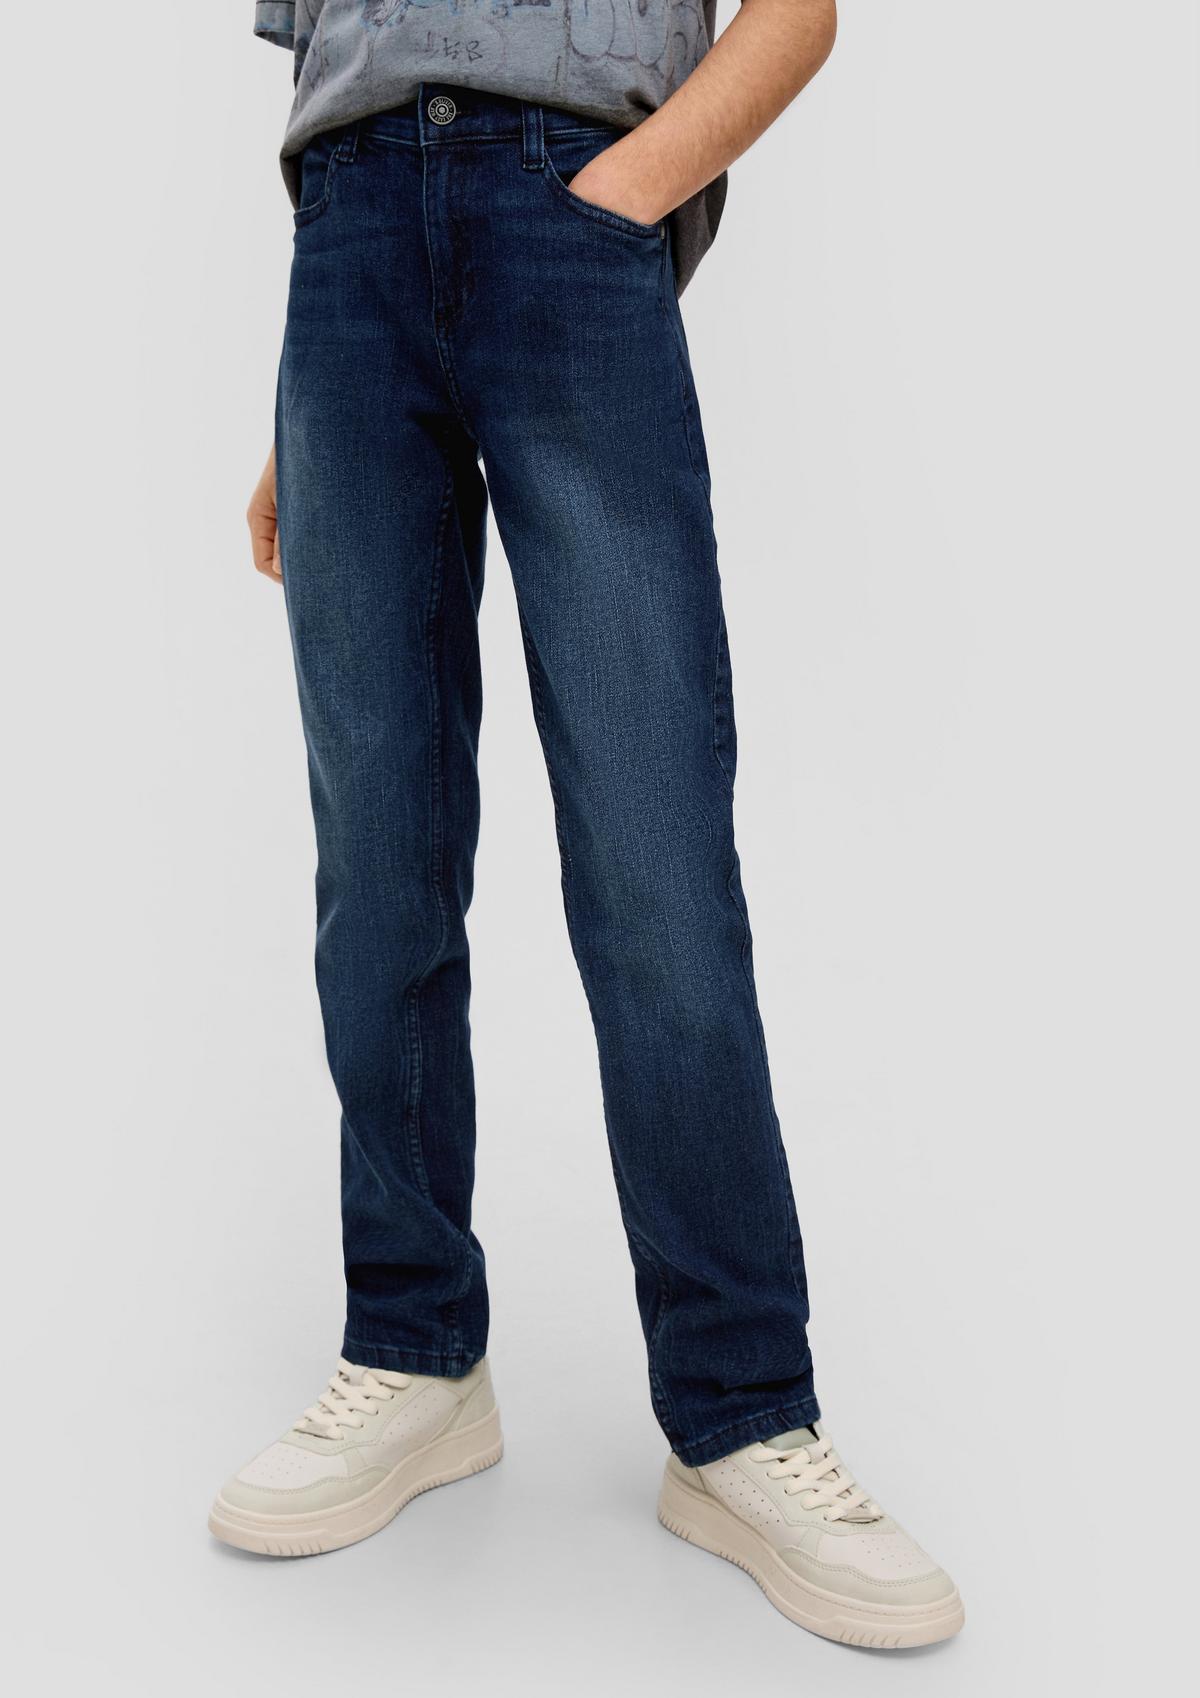 Seattle jeans / regular fit / mid rise / slim leg